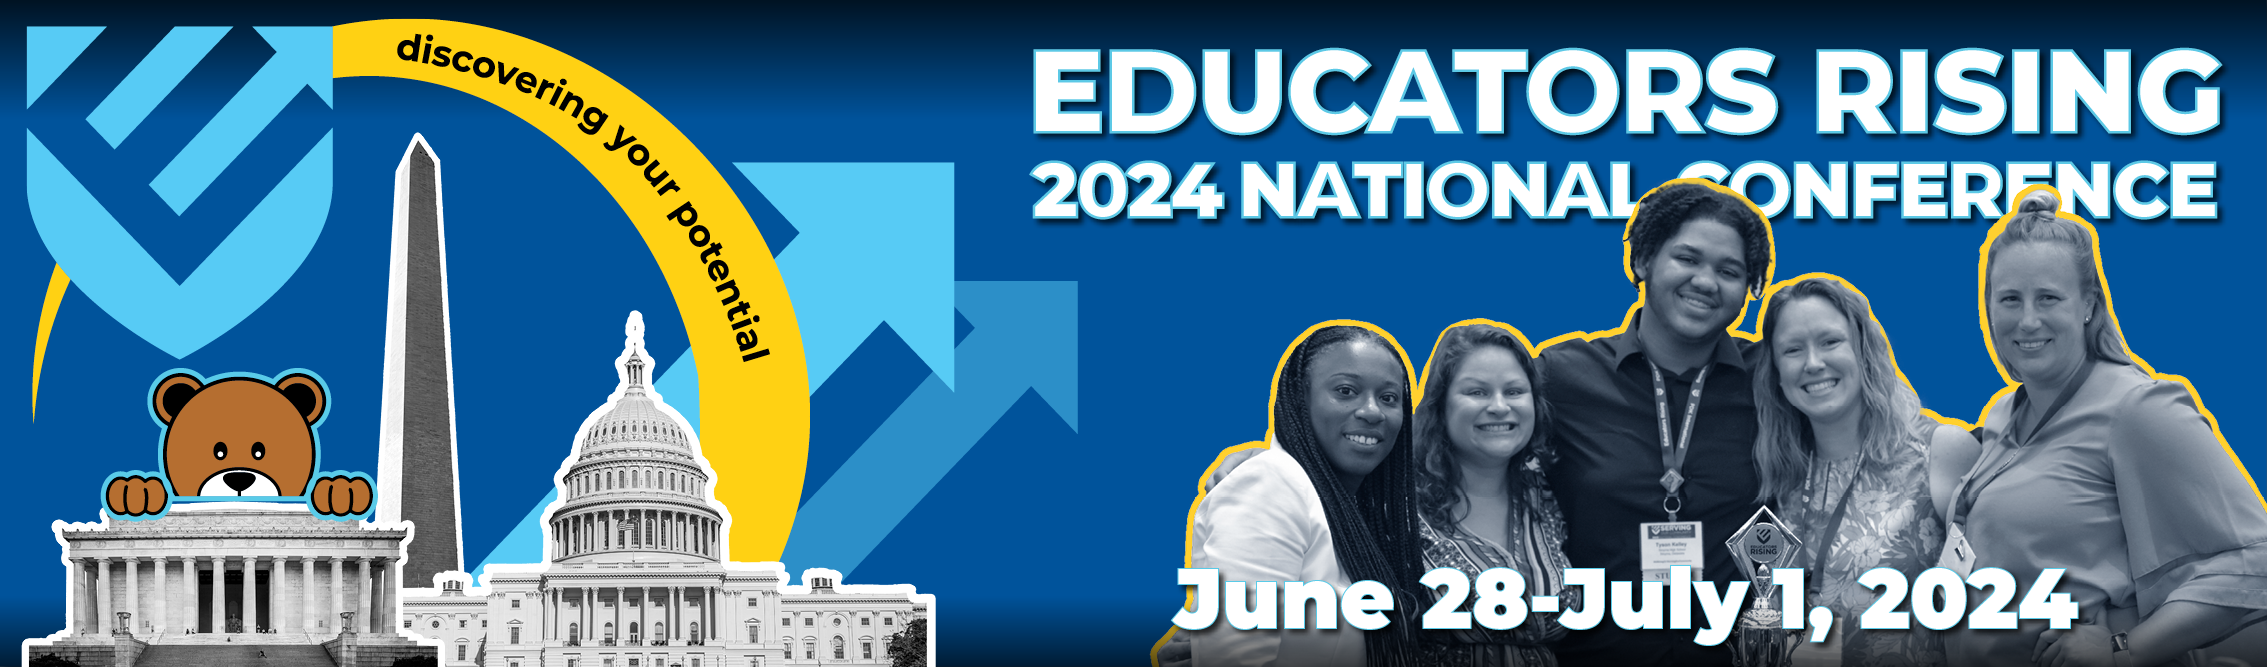 2024 Educators Rising National Conference June 28-July 1, 2024